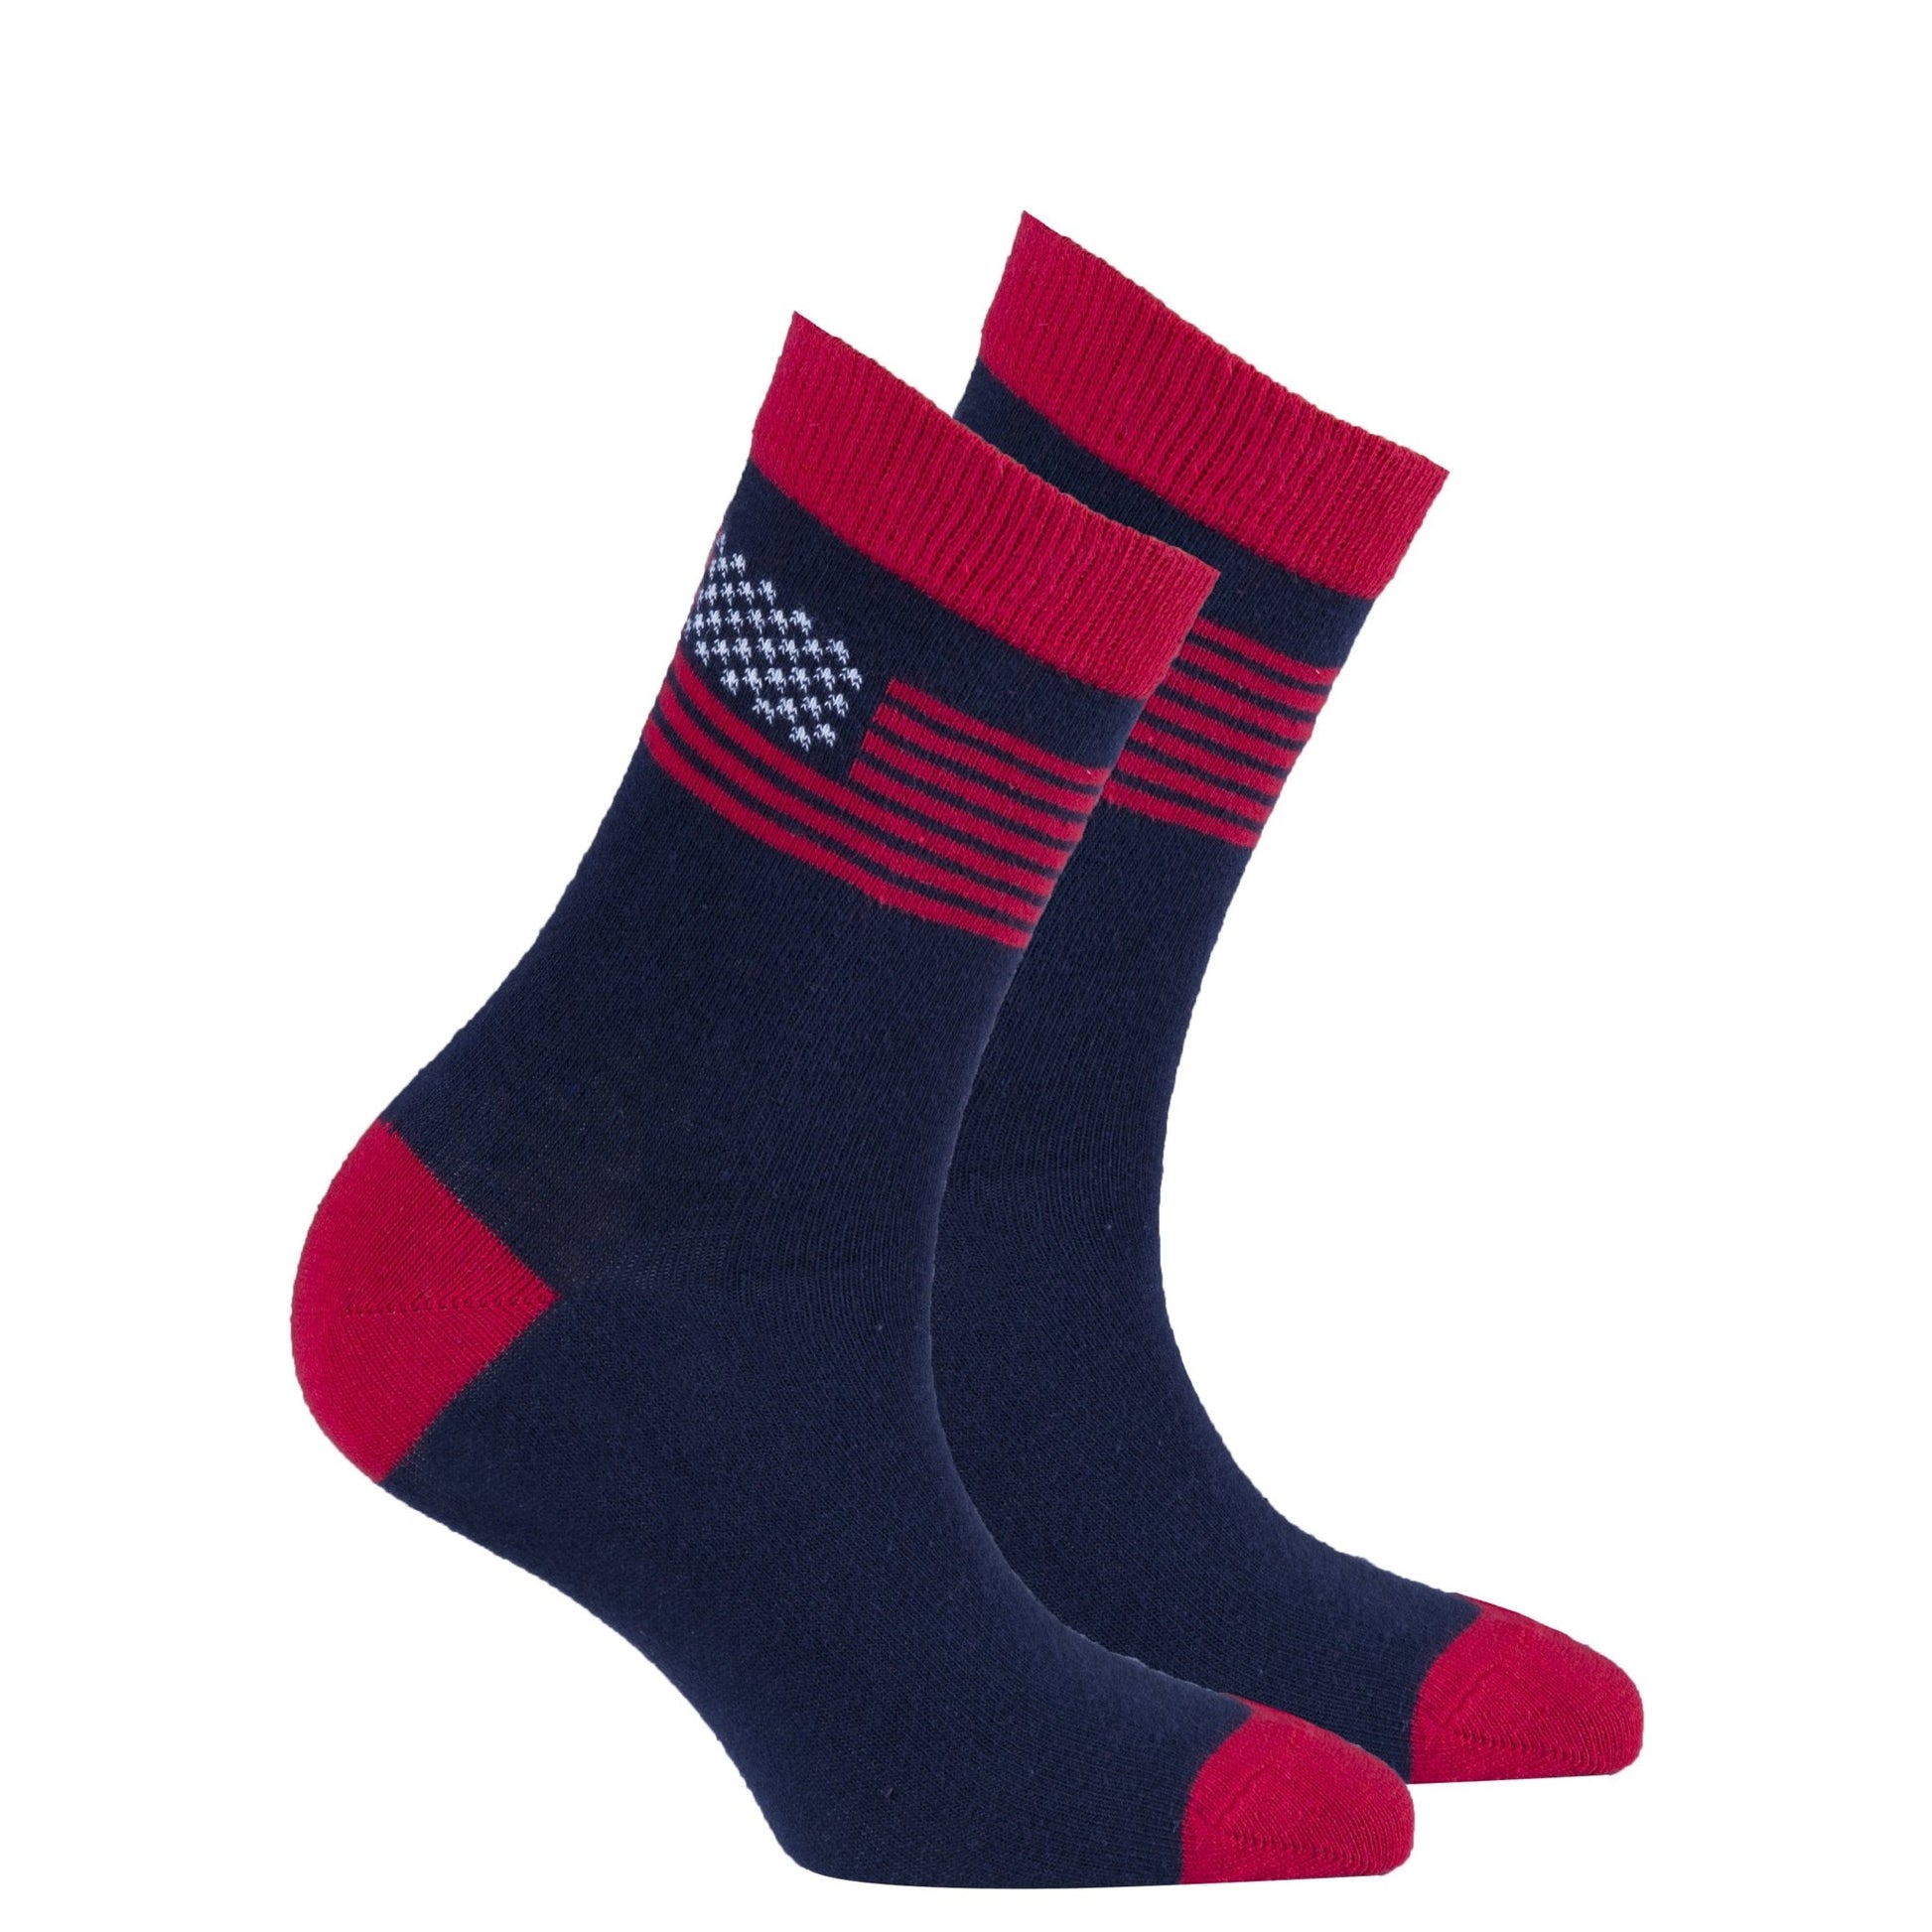 Women's USA Flag Socks - Women - Footwear - Socks - Benn~Burry